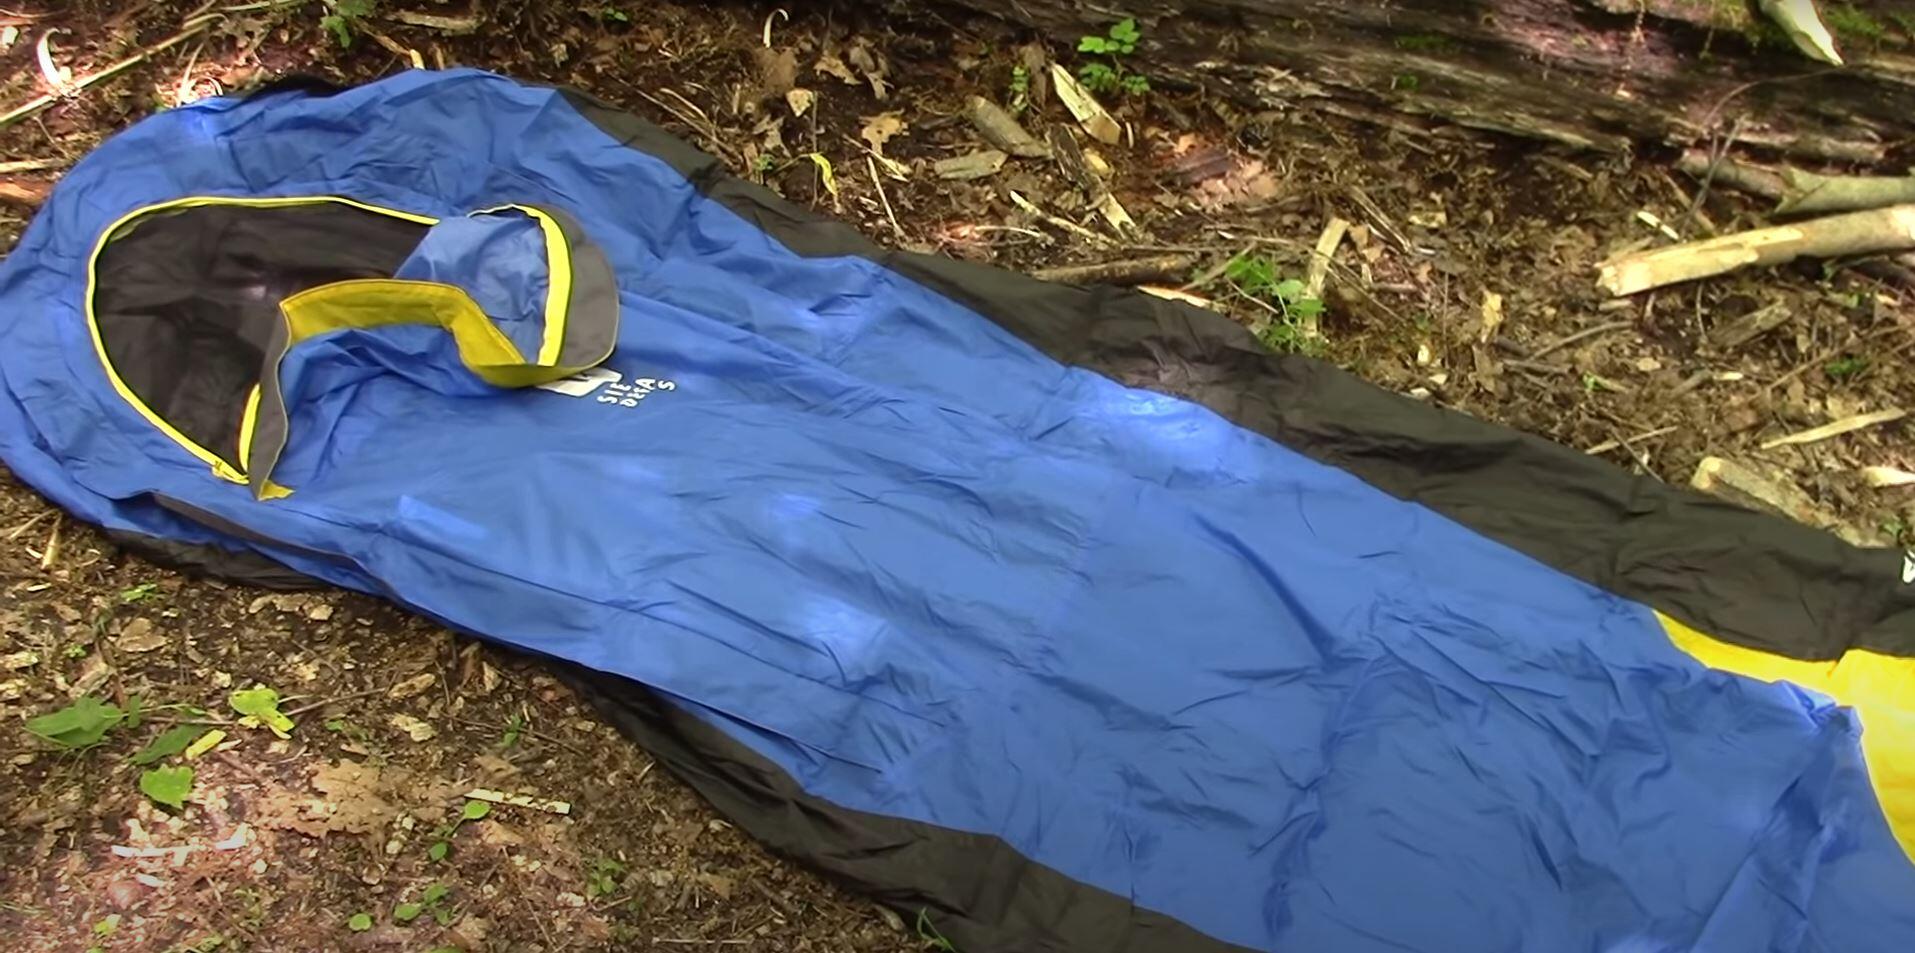 sierra designs backcountry bivvy bag outdoors